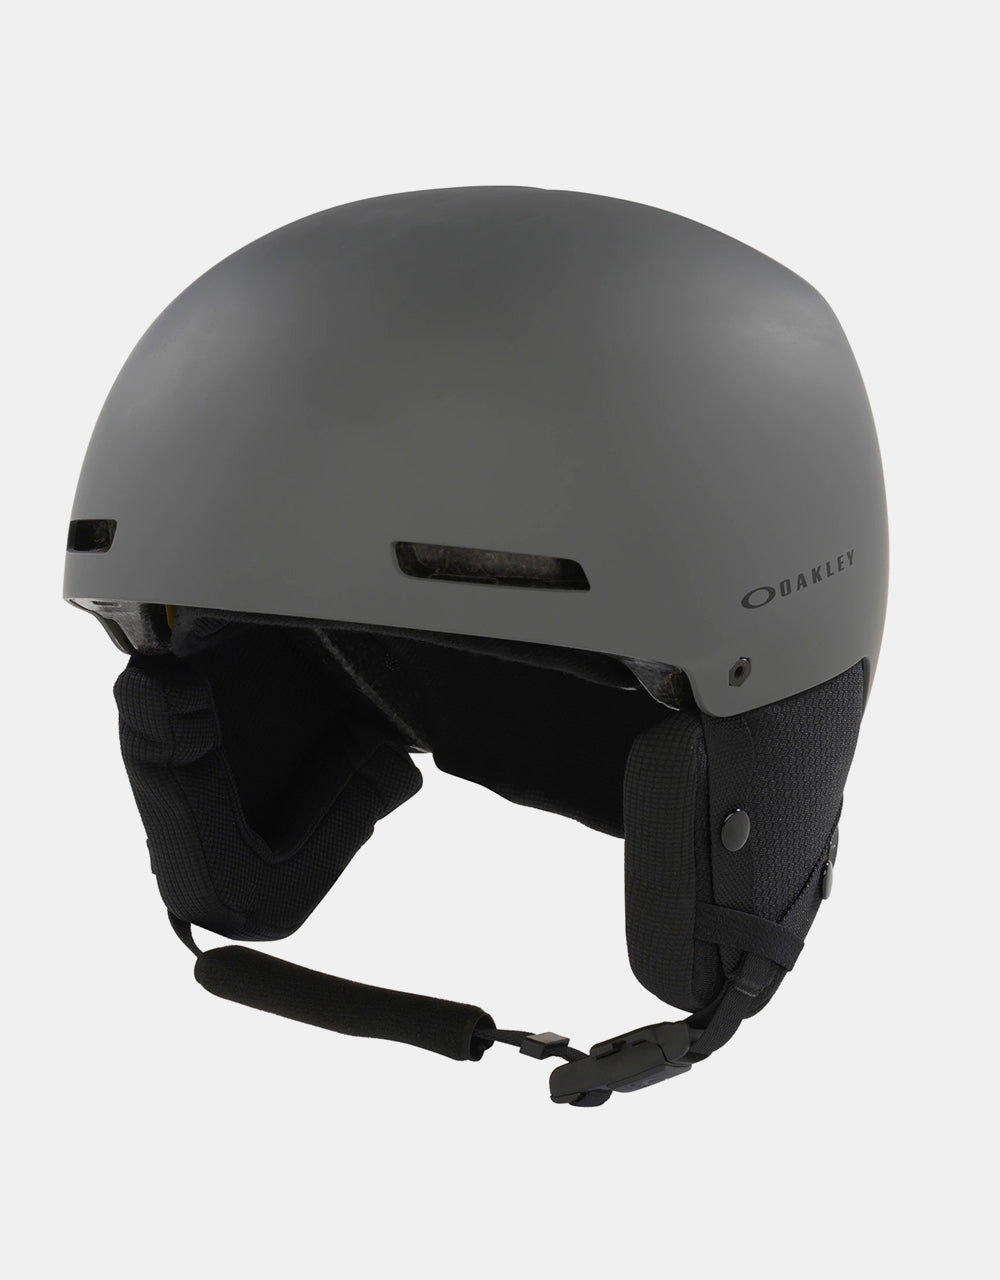 Oakley MOD1 PRO Snowboard Helmet - Forged Iron